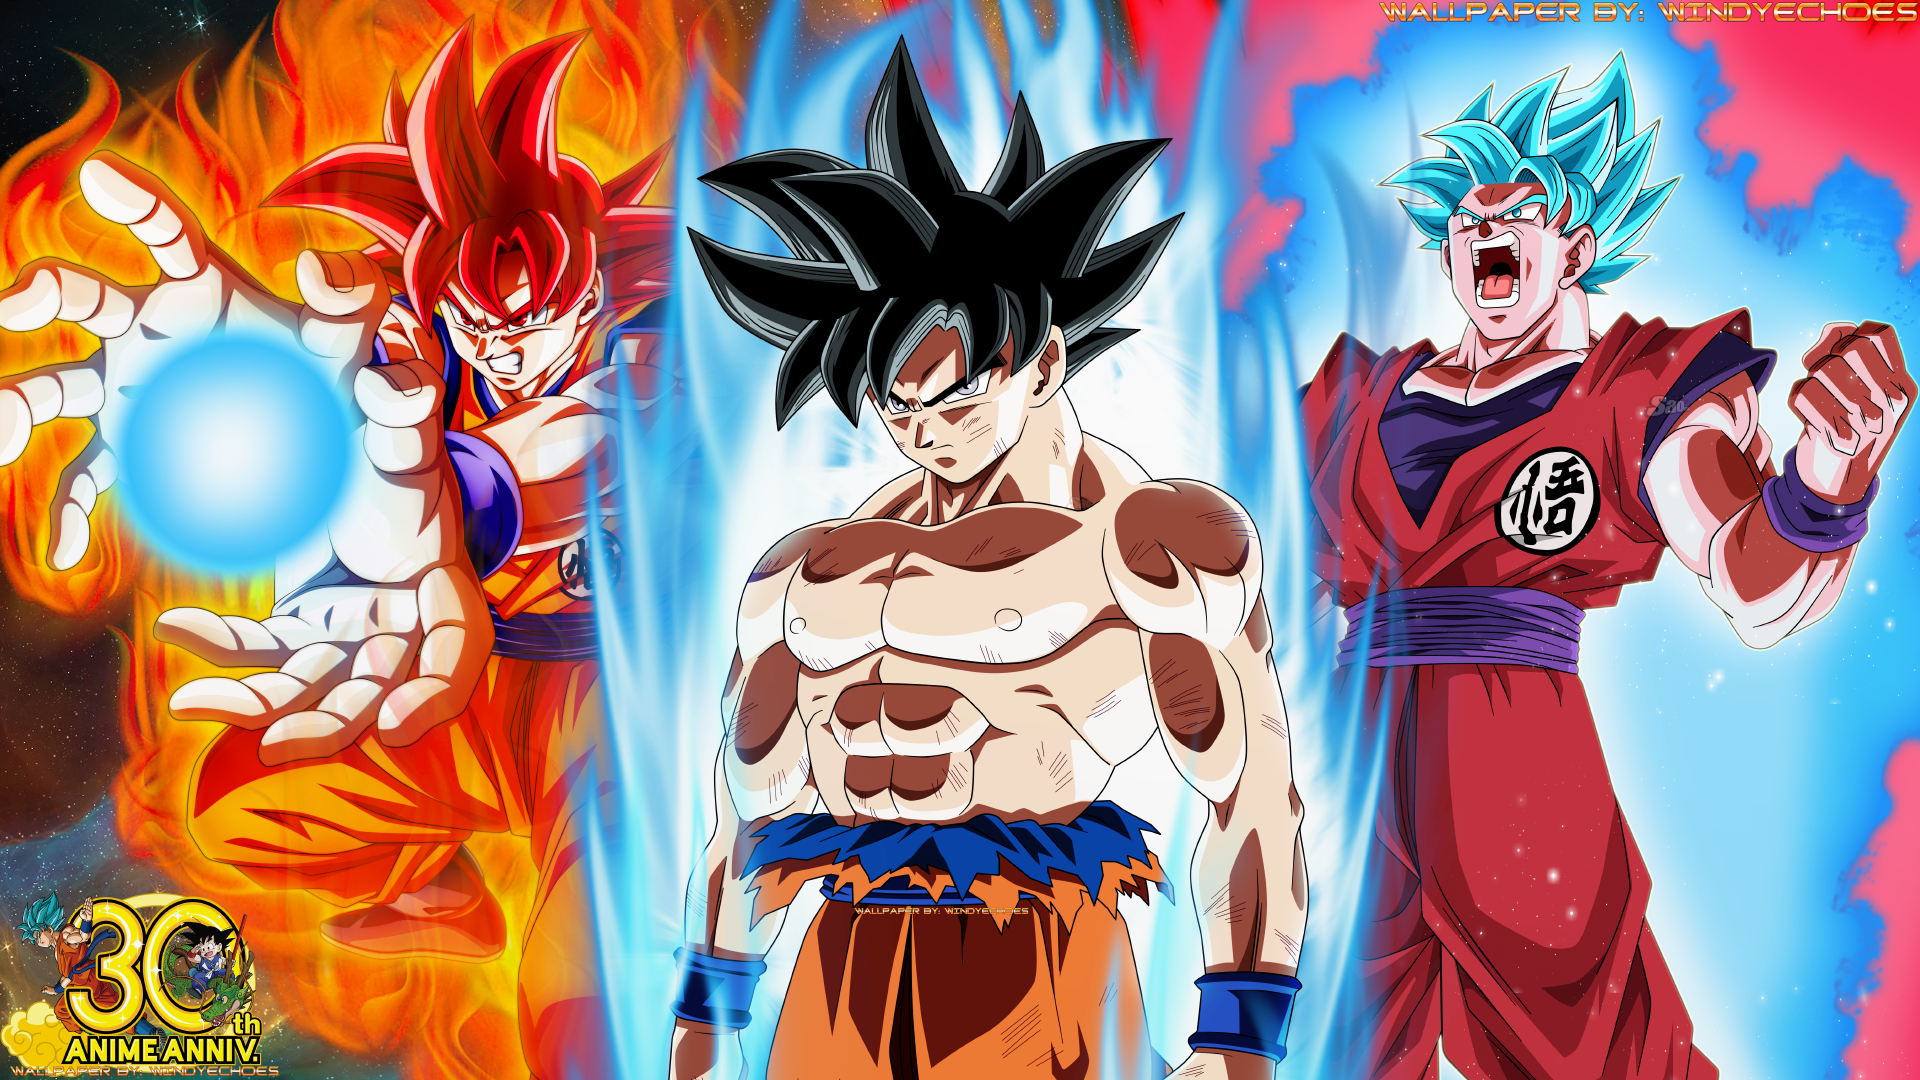 Goku Super Saiyan God - All Three Transformations by WindyEchoes on DeviantArt